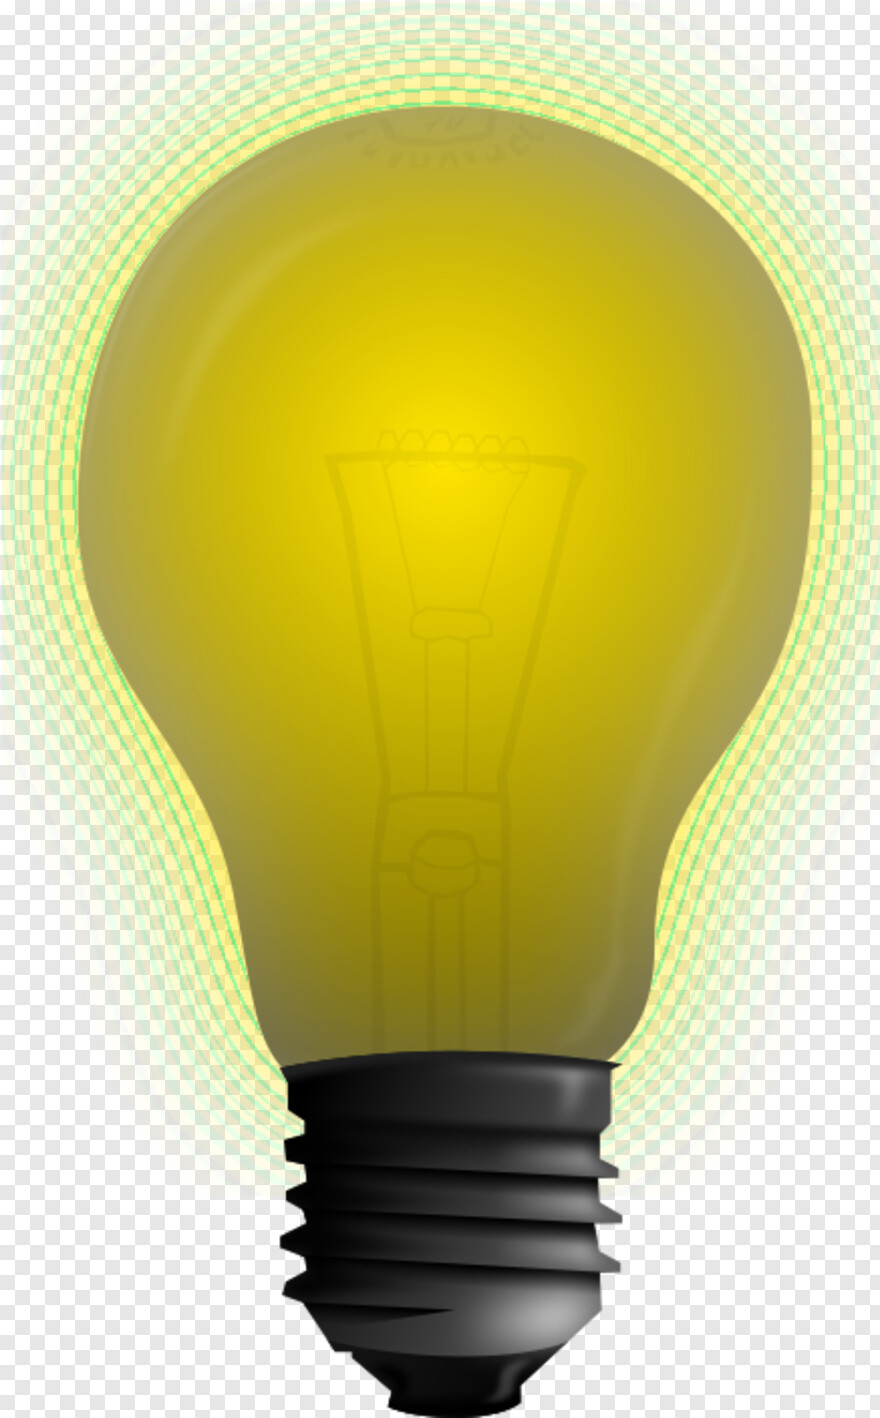 lightbulb-icon # 427091